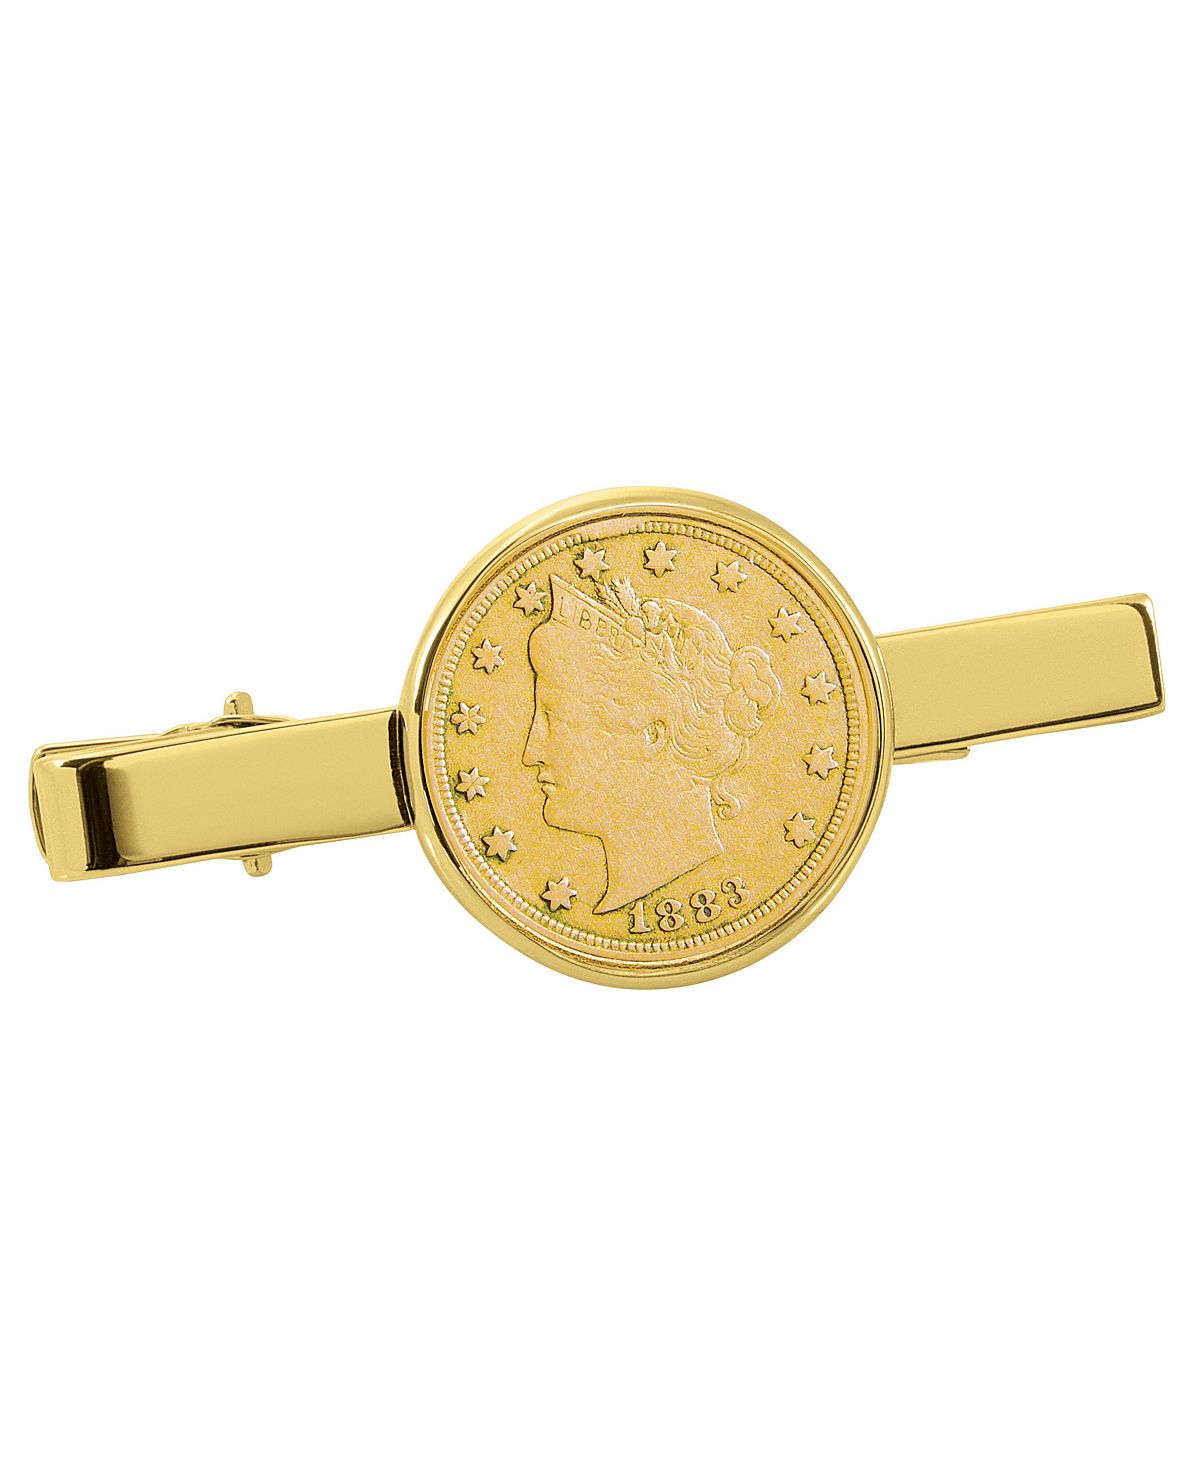 Позолоченный никелевый зажим для галстука для монеты «Свобода» 1800-х годов American Coin Treasures 2021 maple leaf gold coin commonwealth queen s coin commemorative coin badge gift souvenir coins